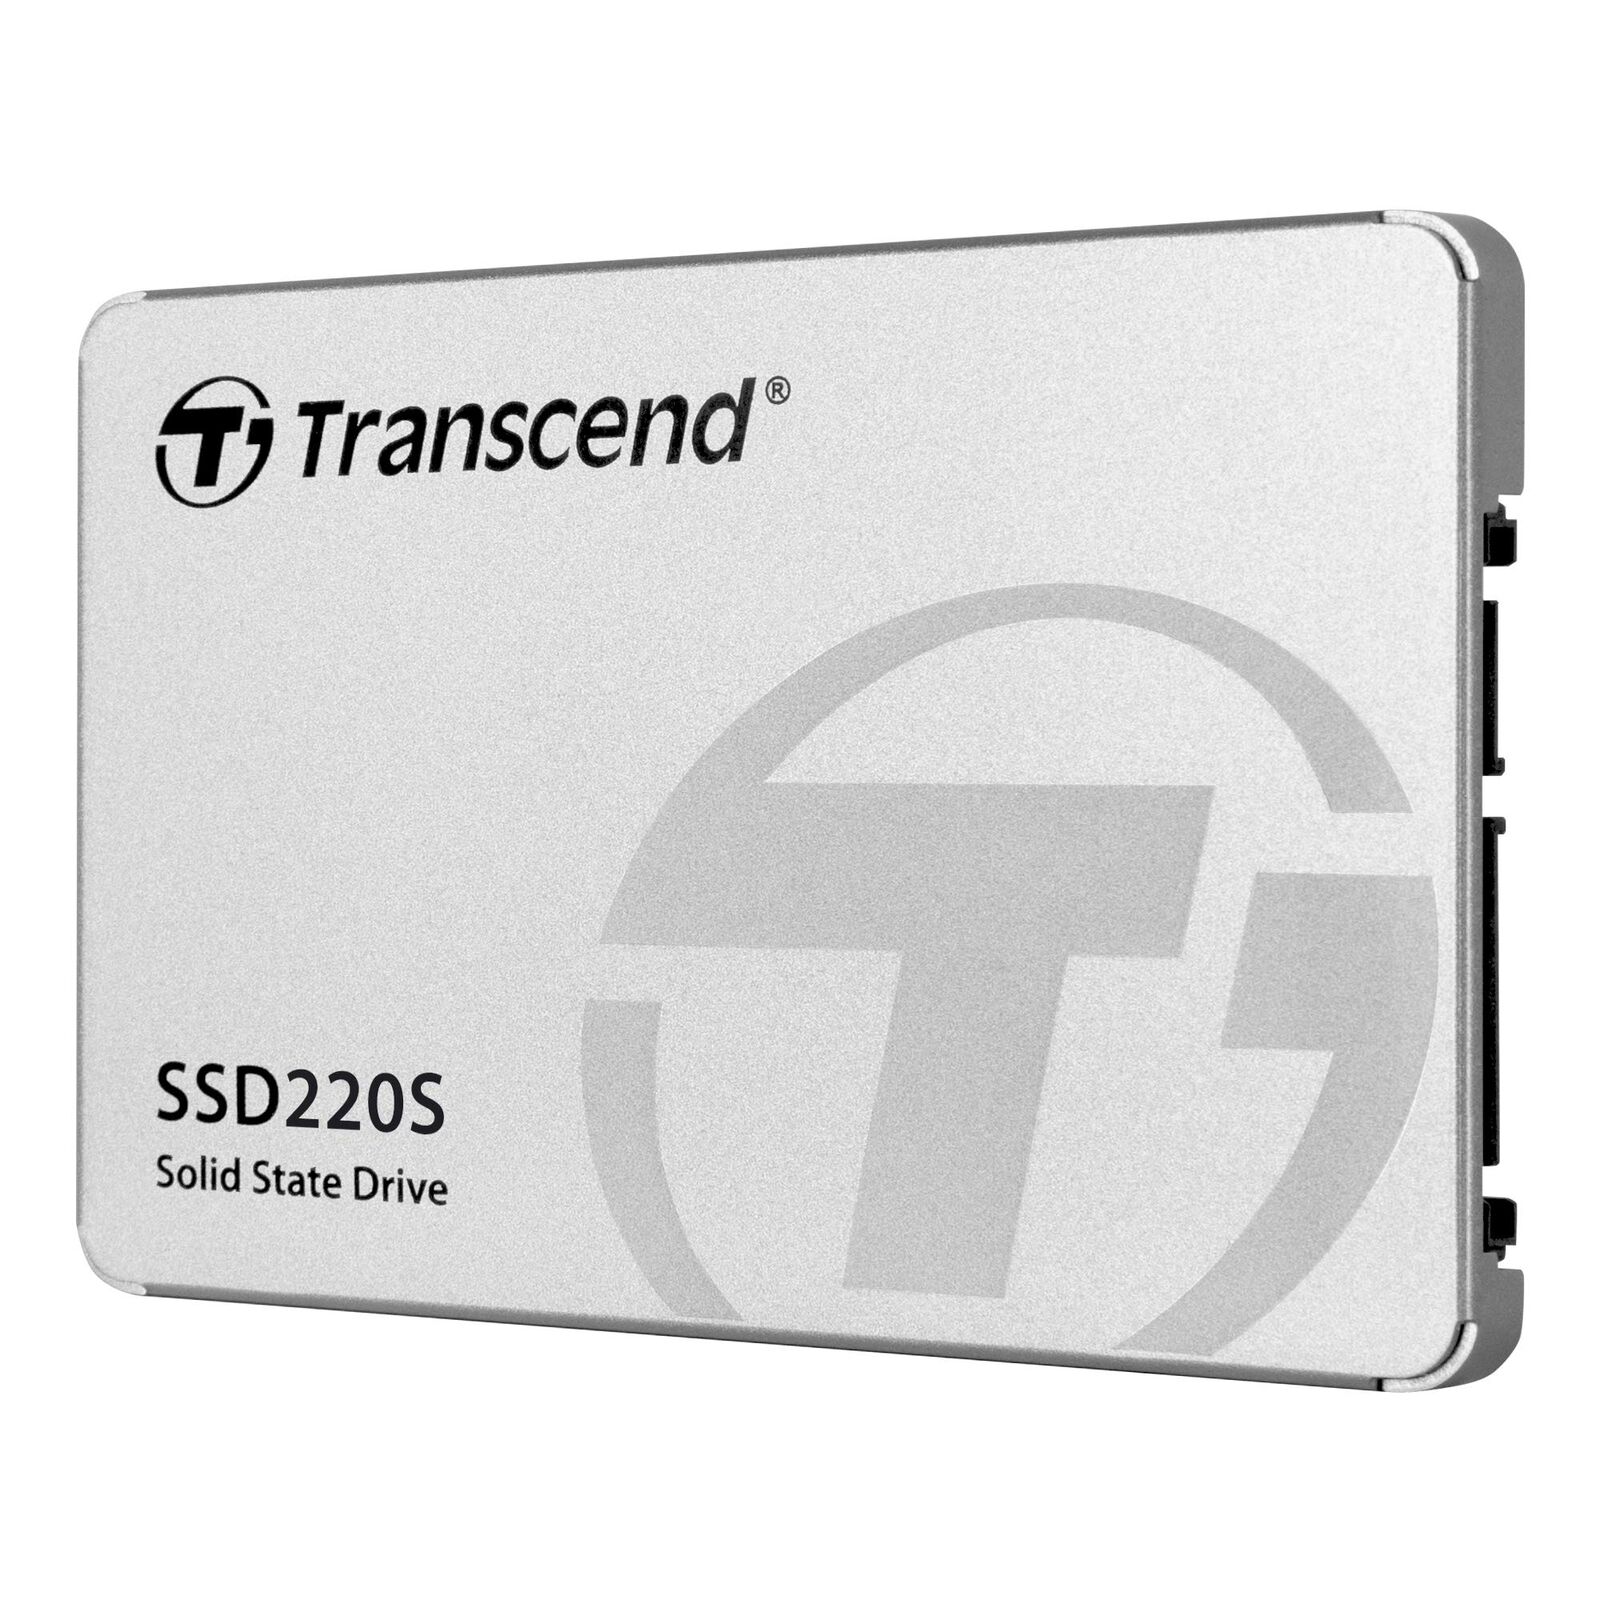 Transcend SSD220S 240 GB 2.5 Inch SATA III 6 Gb/s Internal Solid State Drive (SS